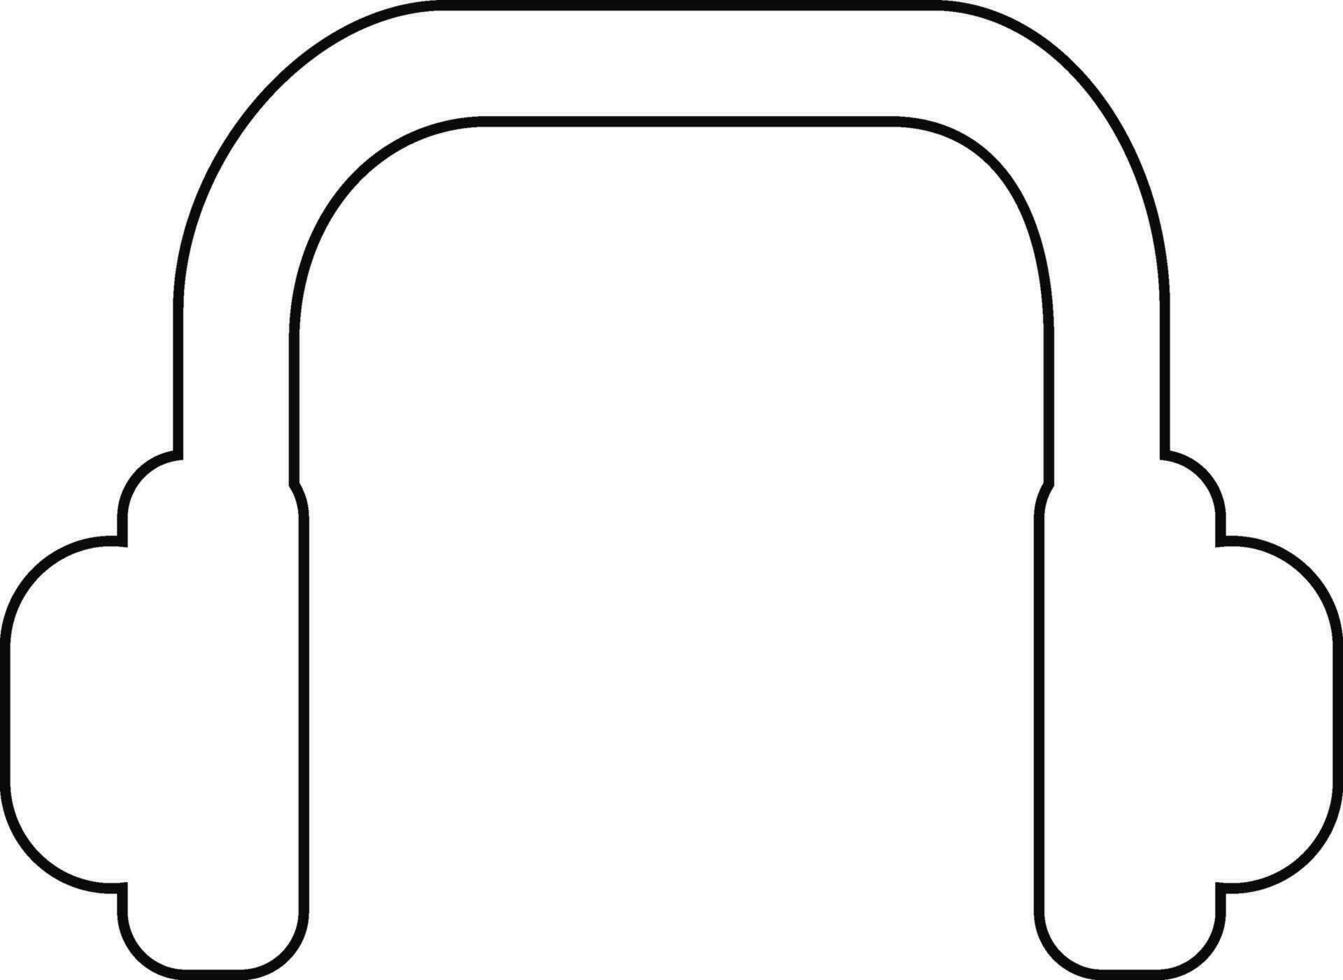 Isolated headphone in black line art. vector